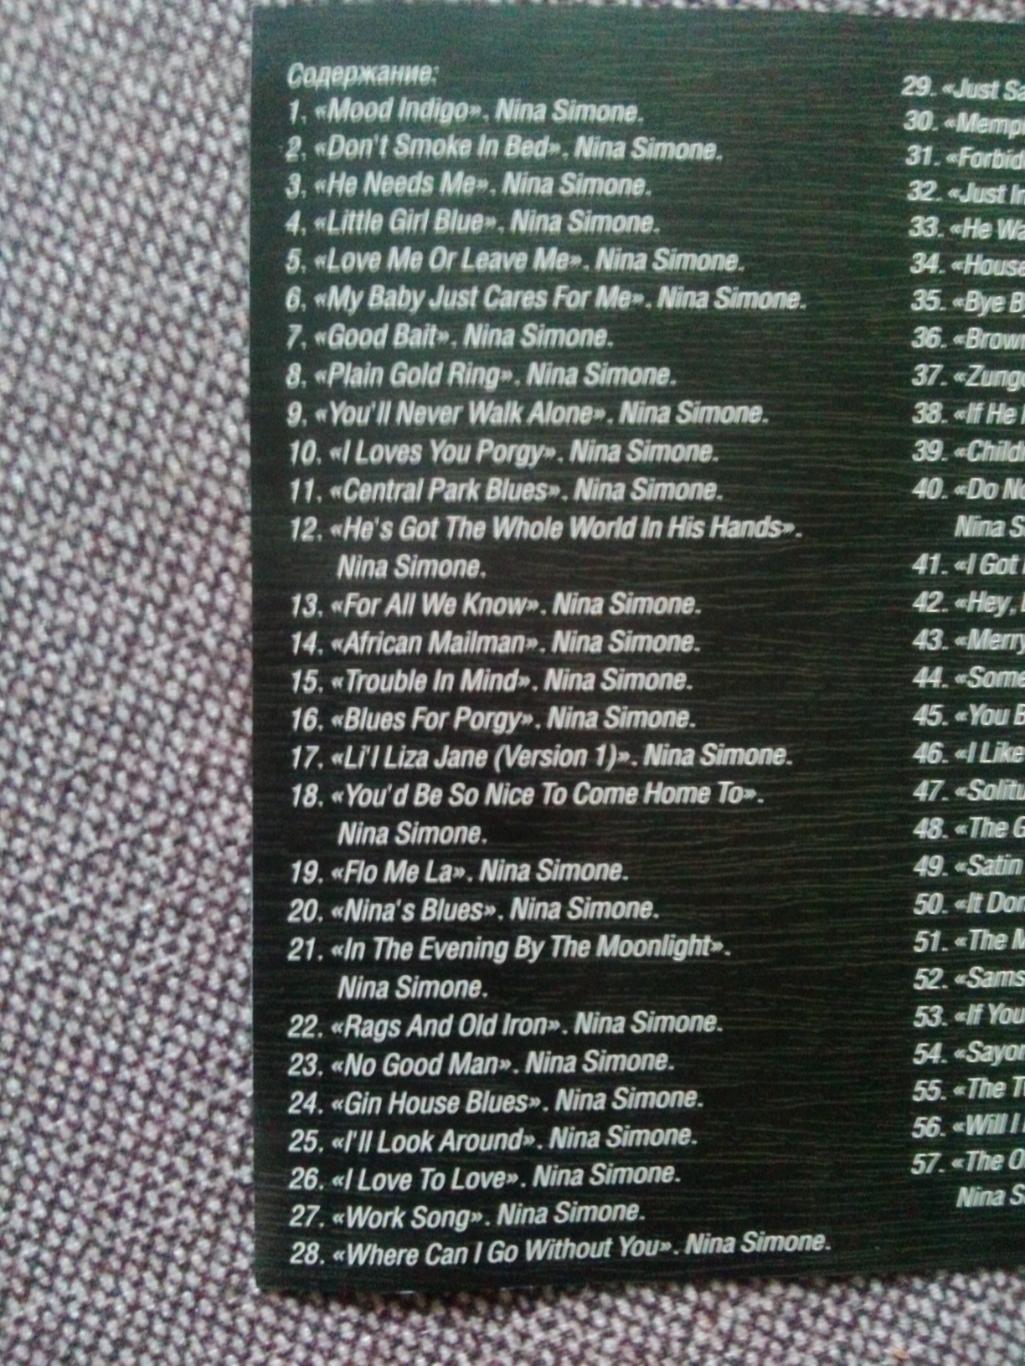 MP - 3 CD диск : Нина Симон (Nina Simone) 1958 - 1963 гг. (6 альбомов) Джаз-блюз 2